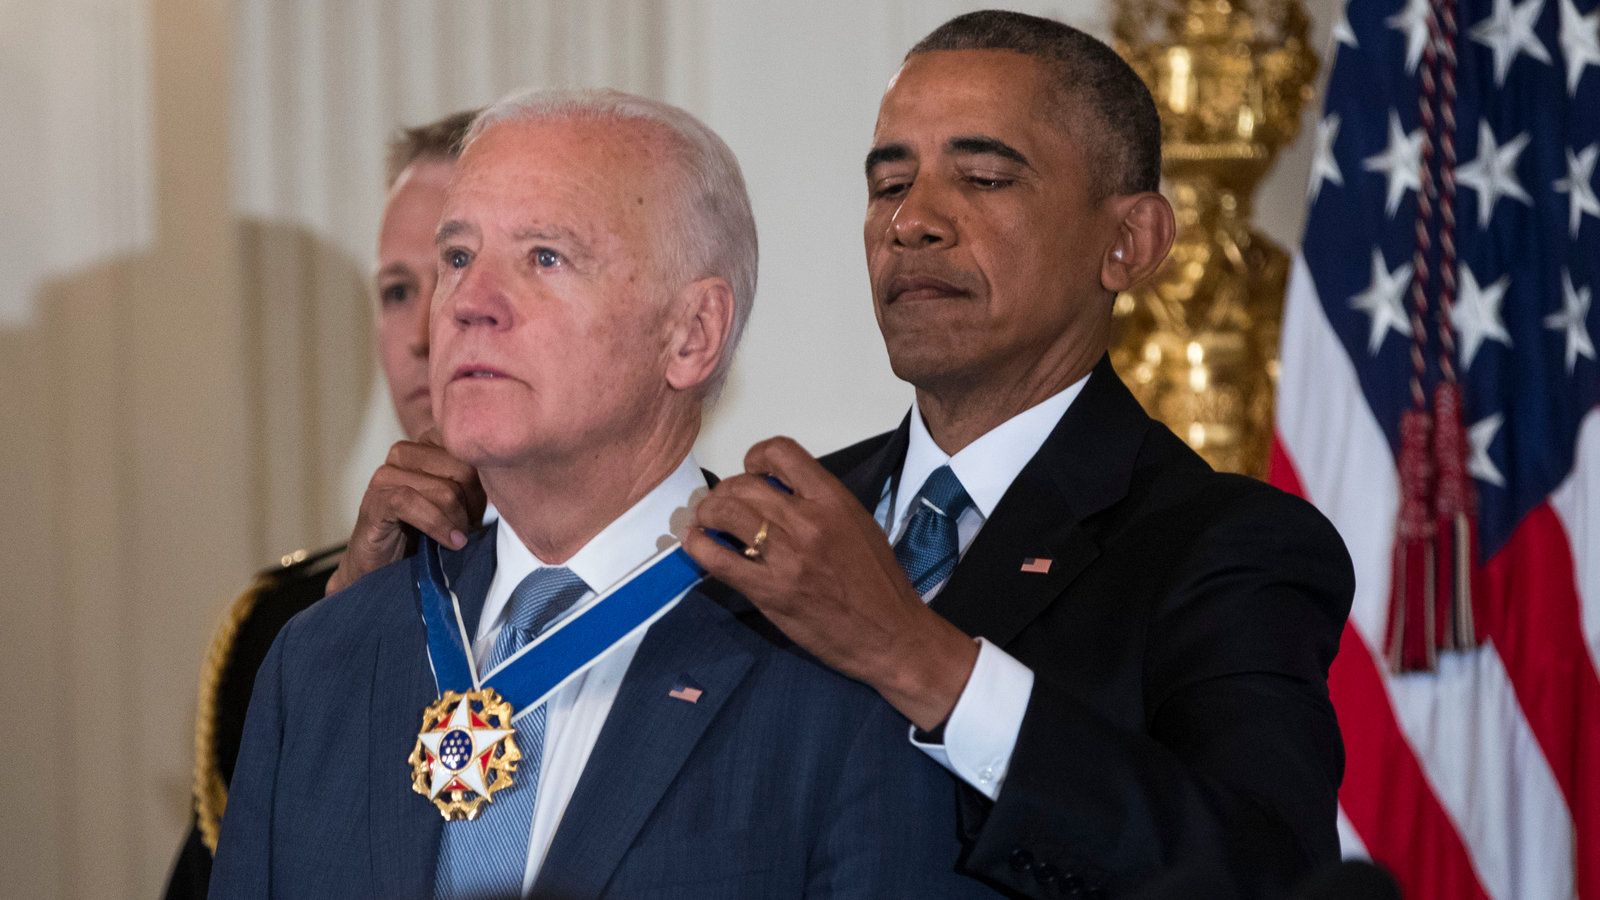 Obama Surprises Joe Biden With Presidential Medal of Freedom